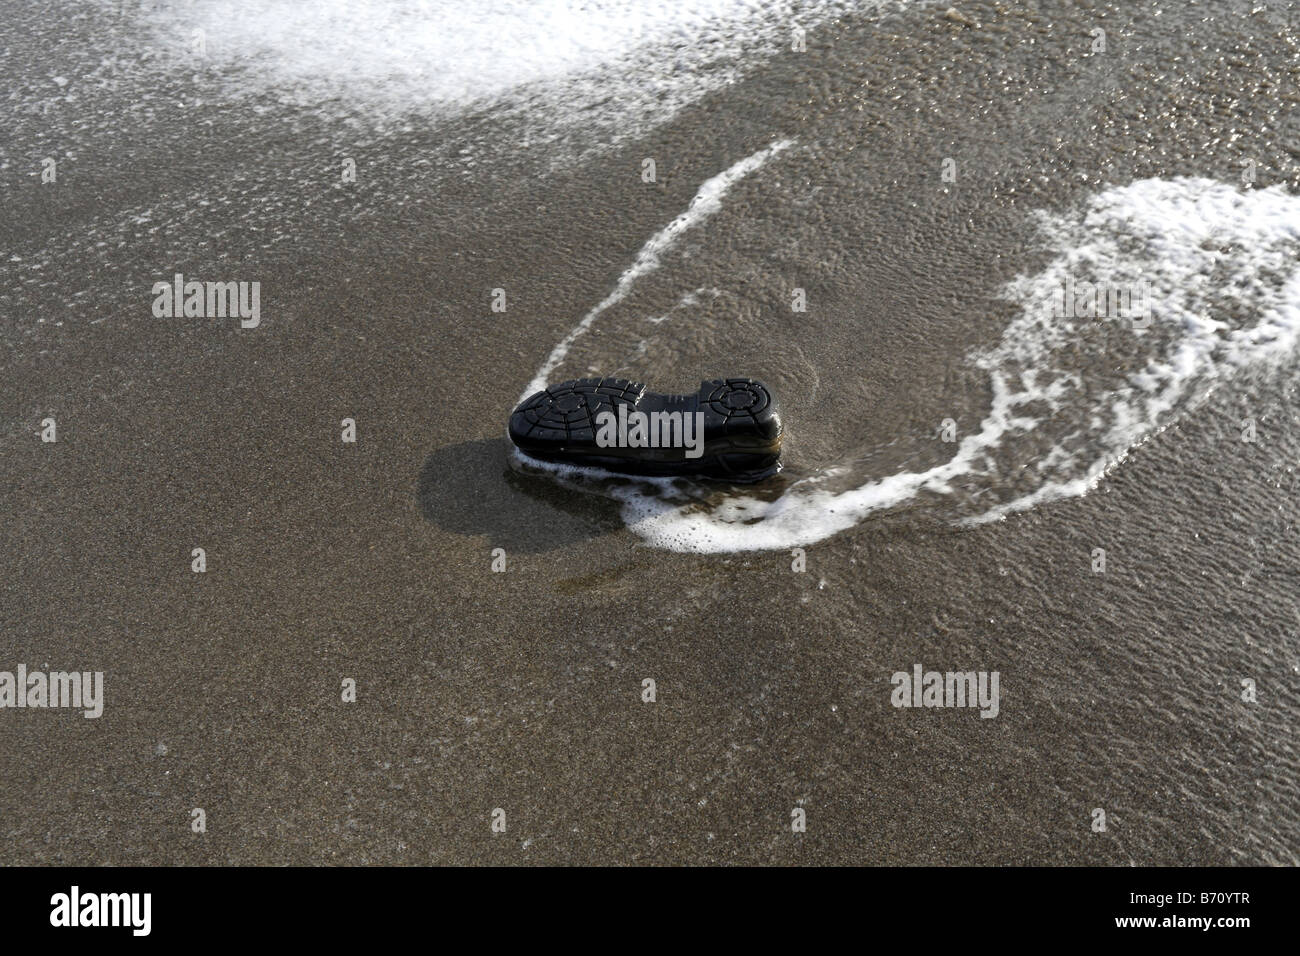 Mans Shoe Washed Up on Beach Stock Photo